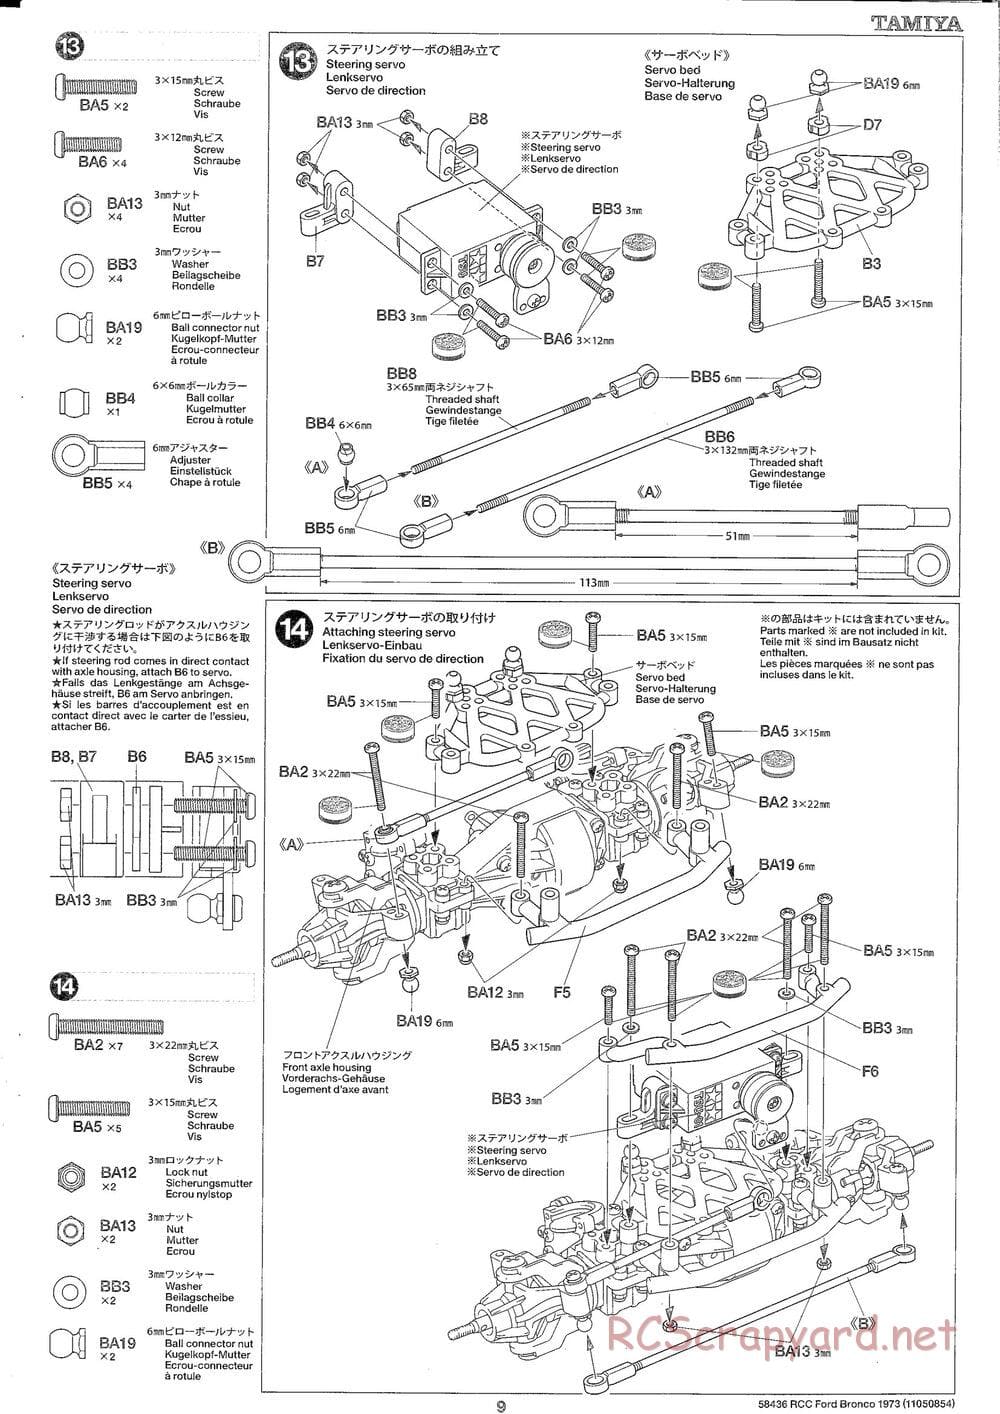 Tamiya - Ford Bronco 1973 - CR-01 Chassis - Manual - Page 9